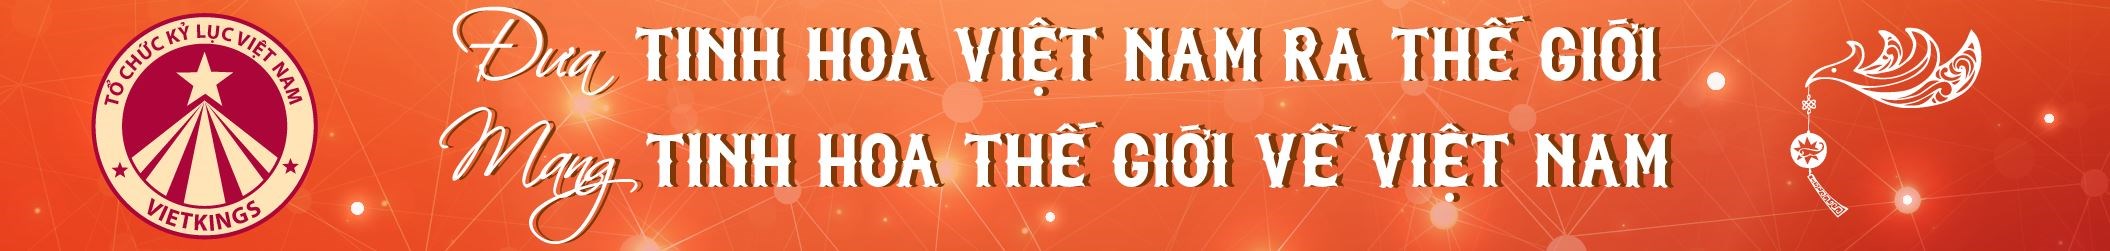 Kỷ lục Việt Nam